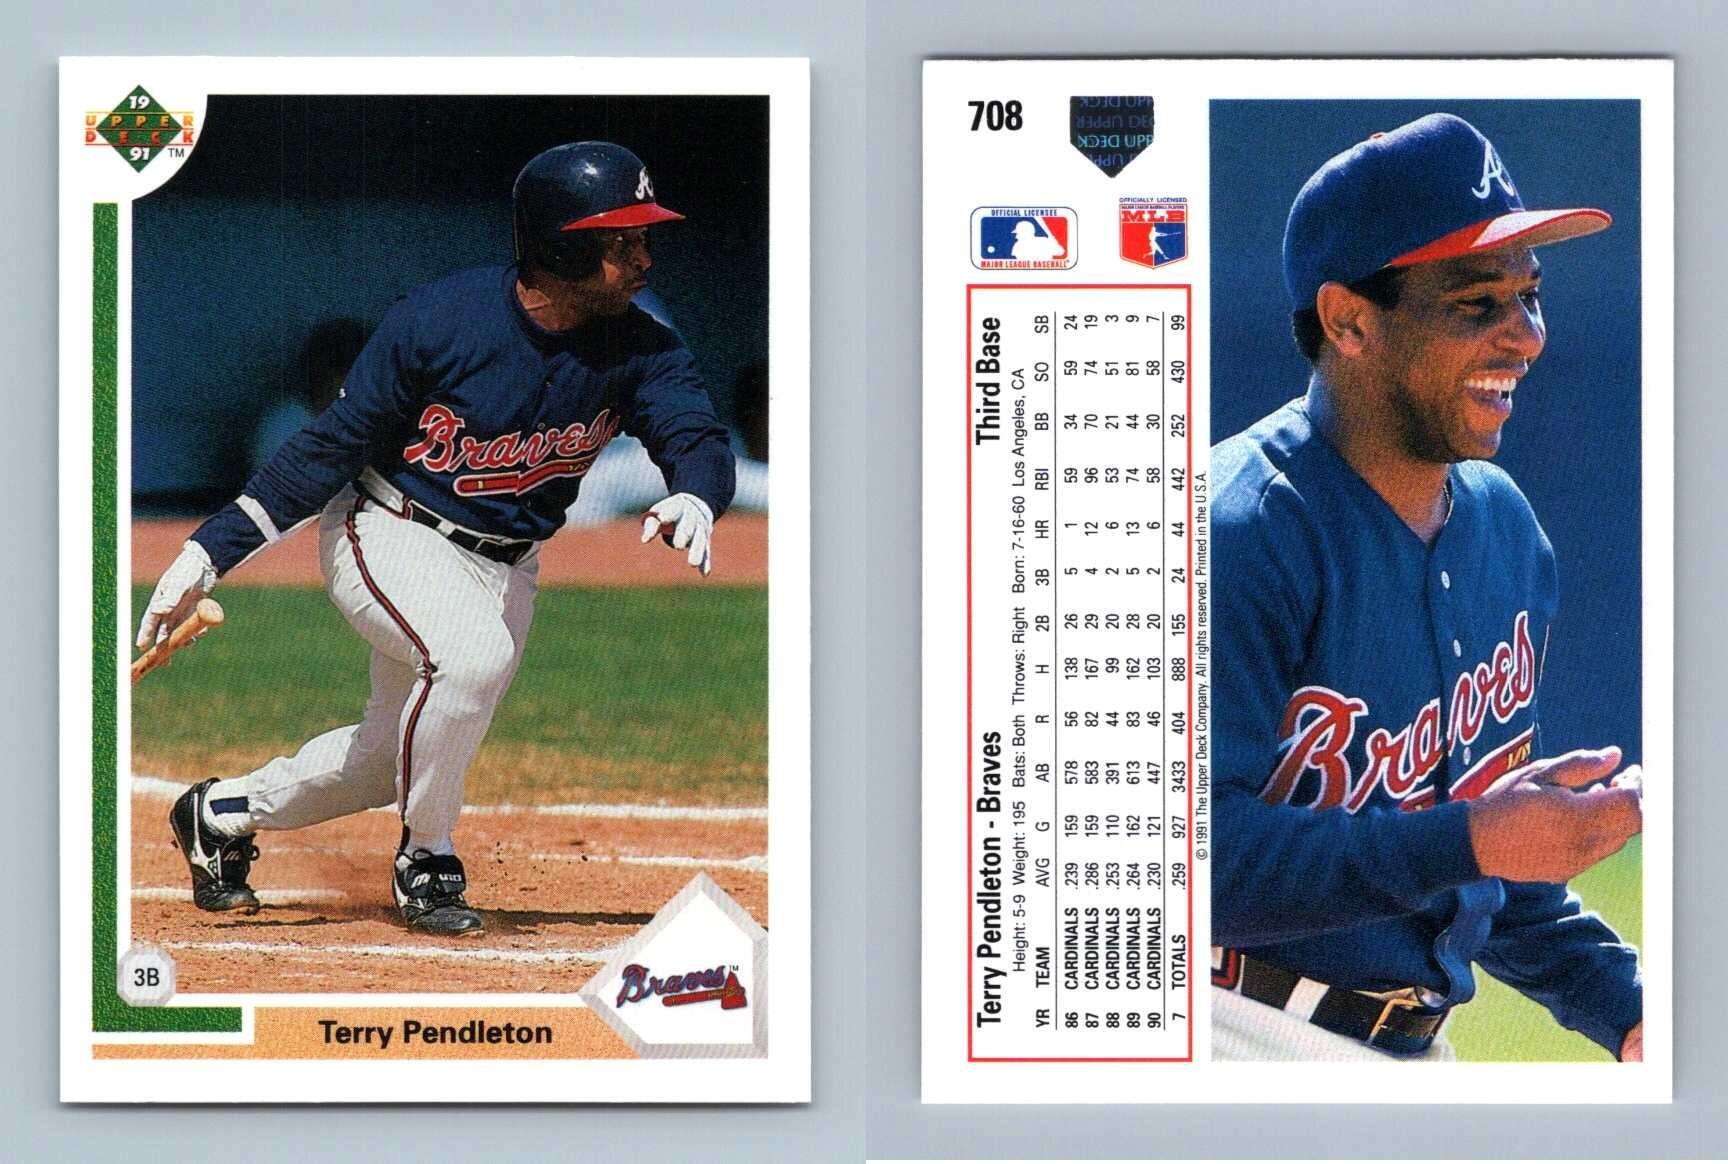 1991 Upper Deck Baseball Card #708 Terry Pendleton Braves